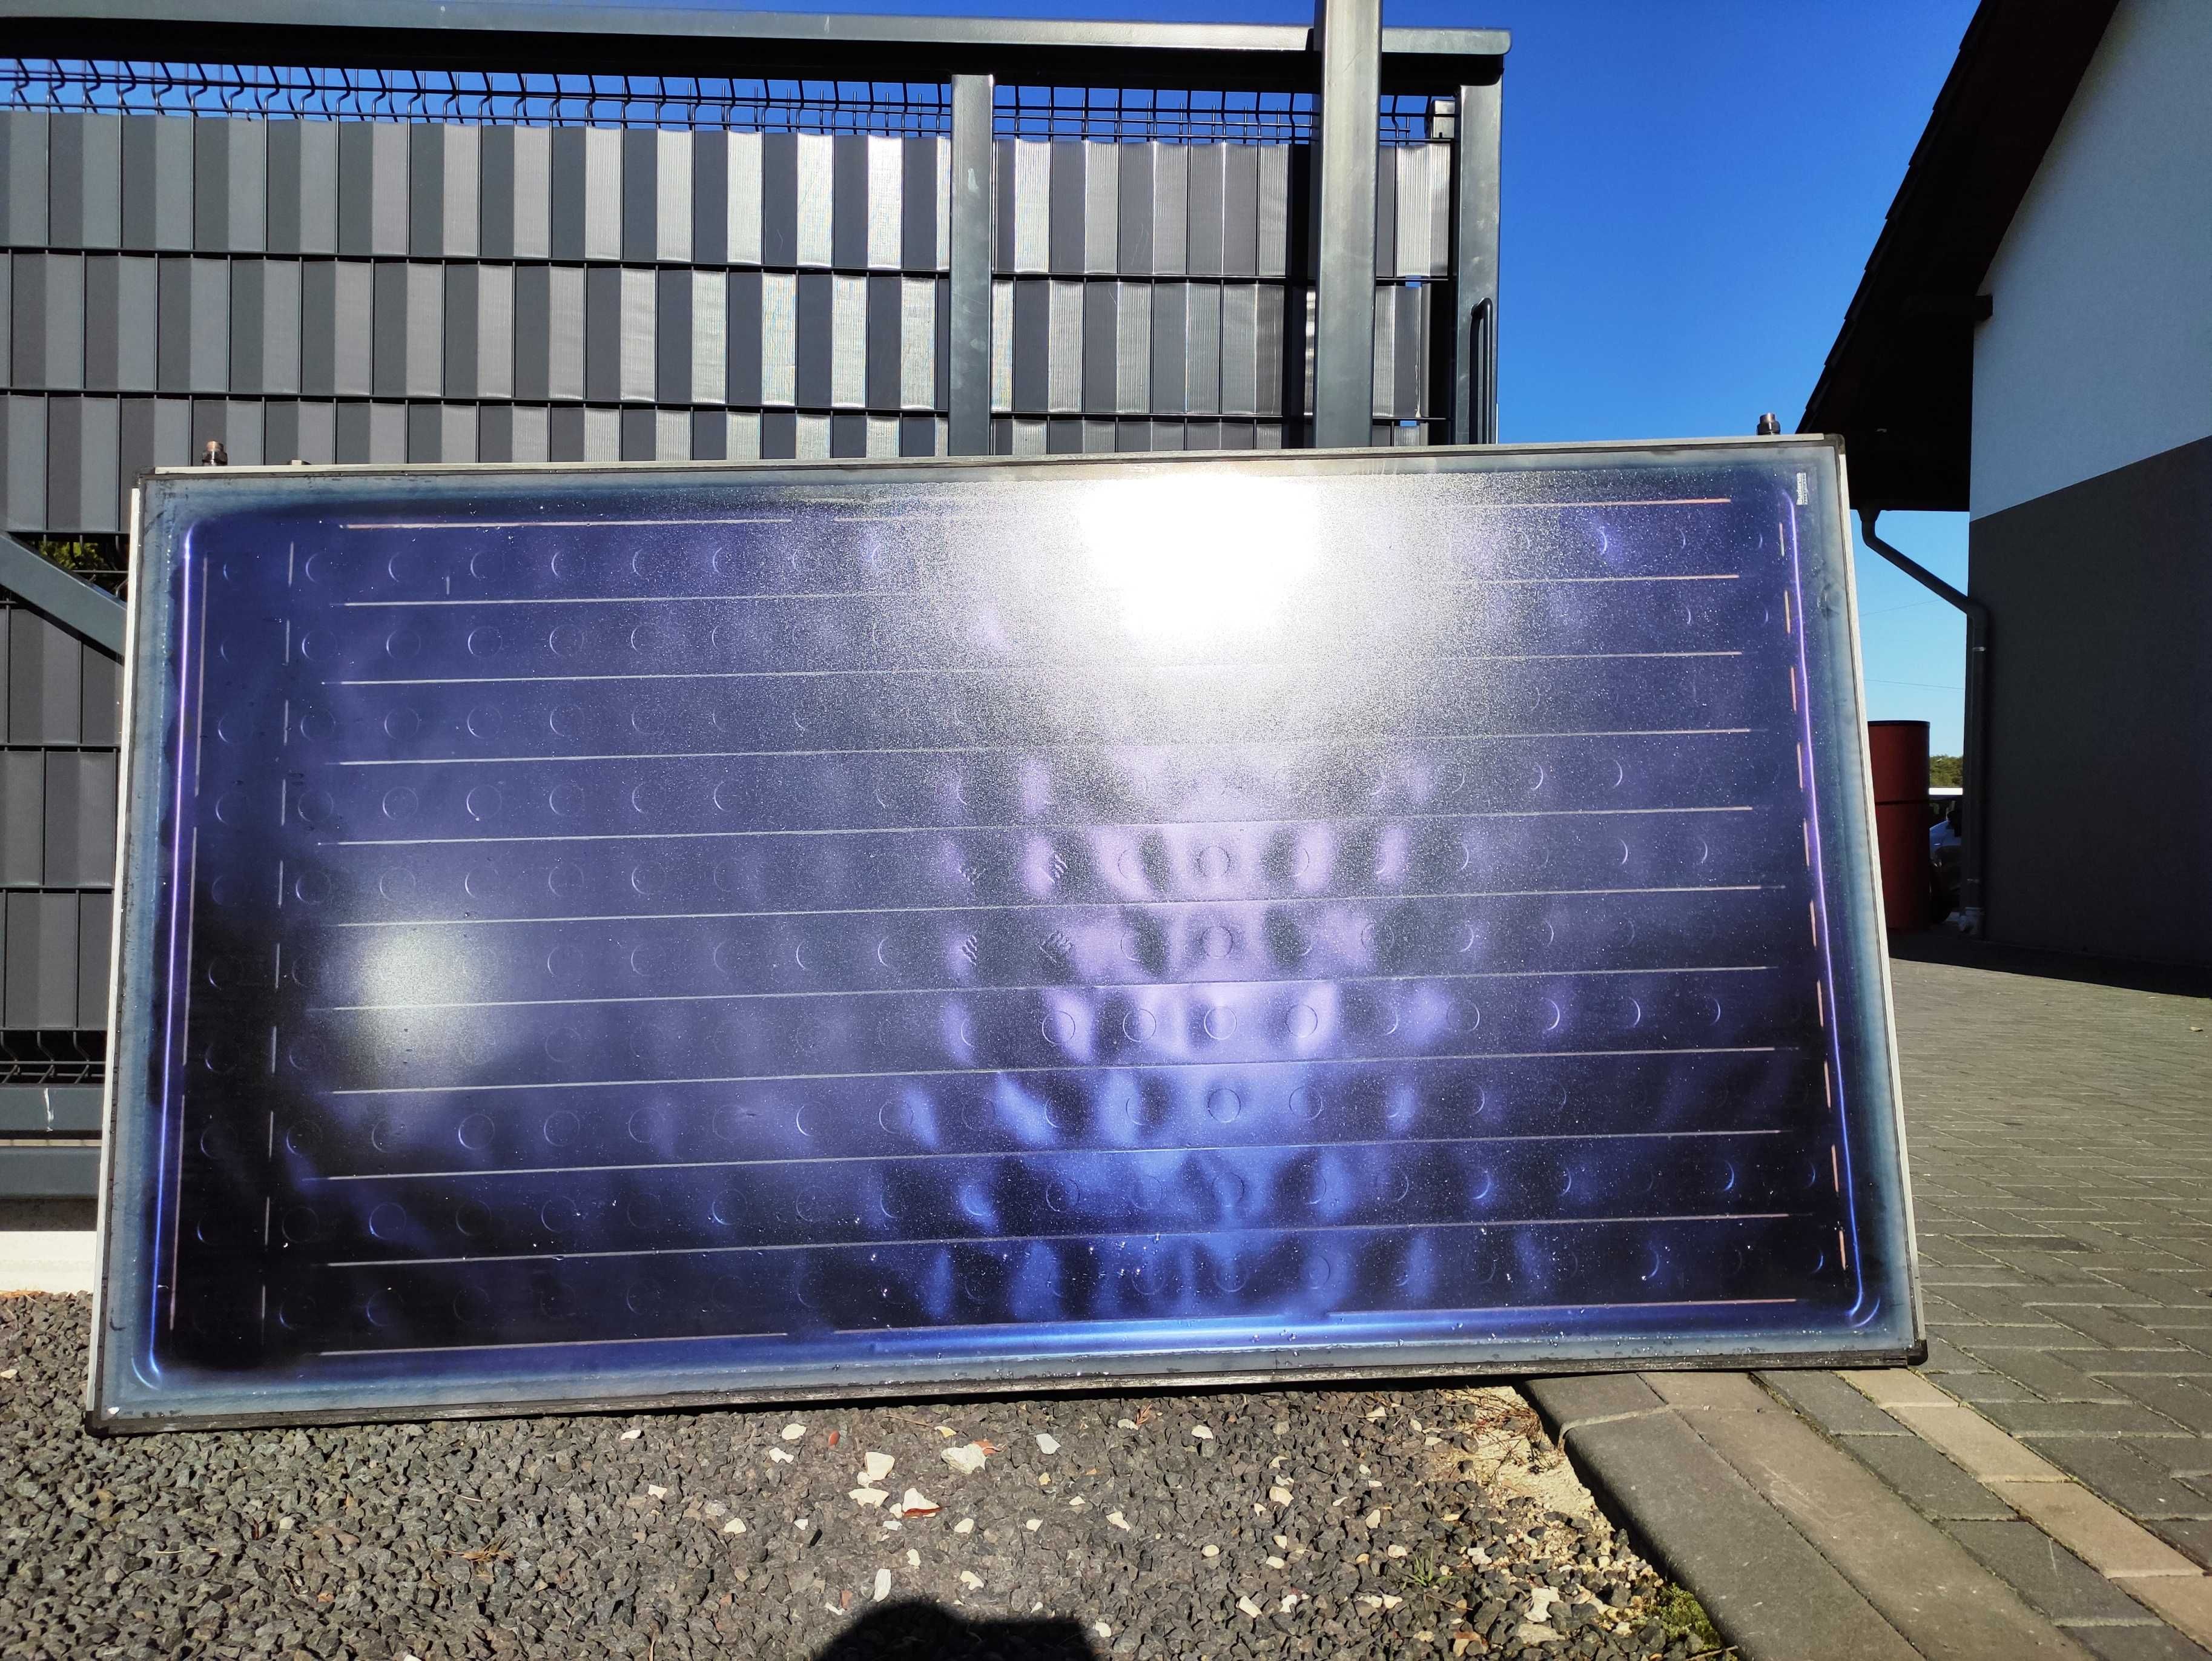 Solar panel kolektor Rotex Wagner Buderus niemiecki stan super